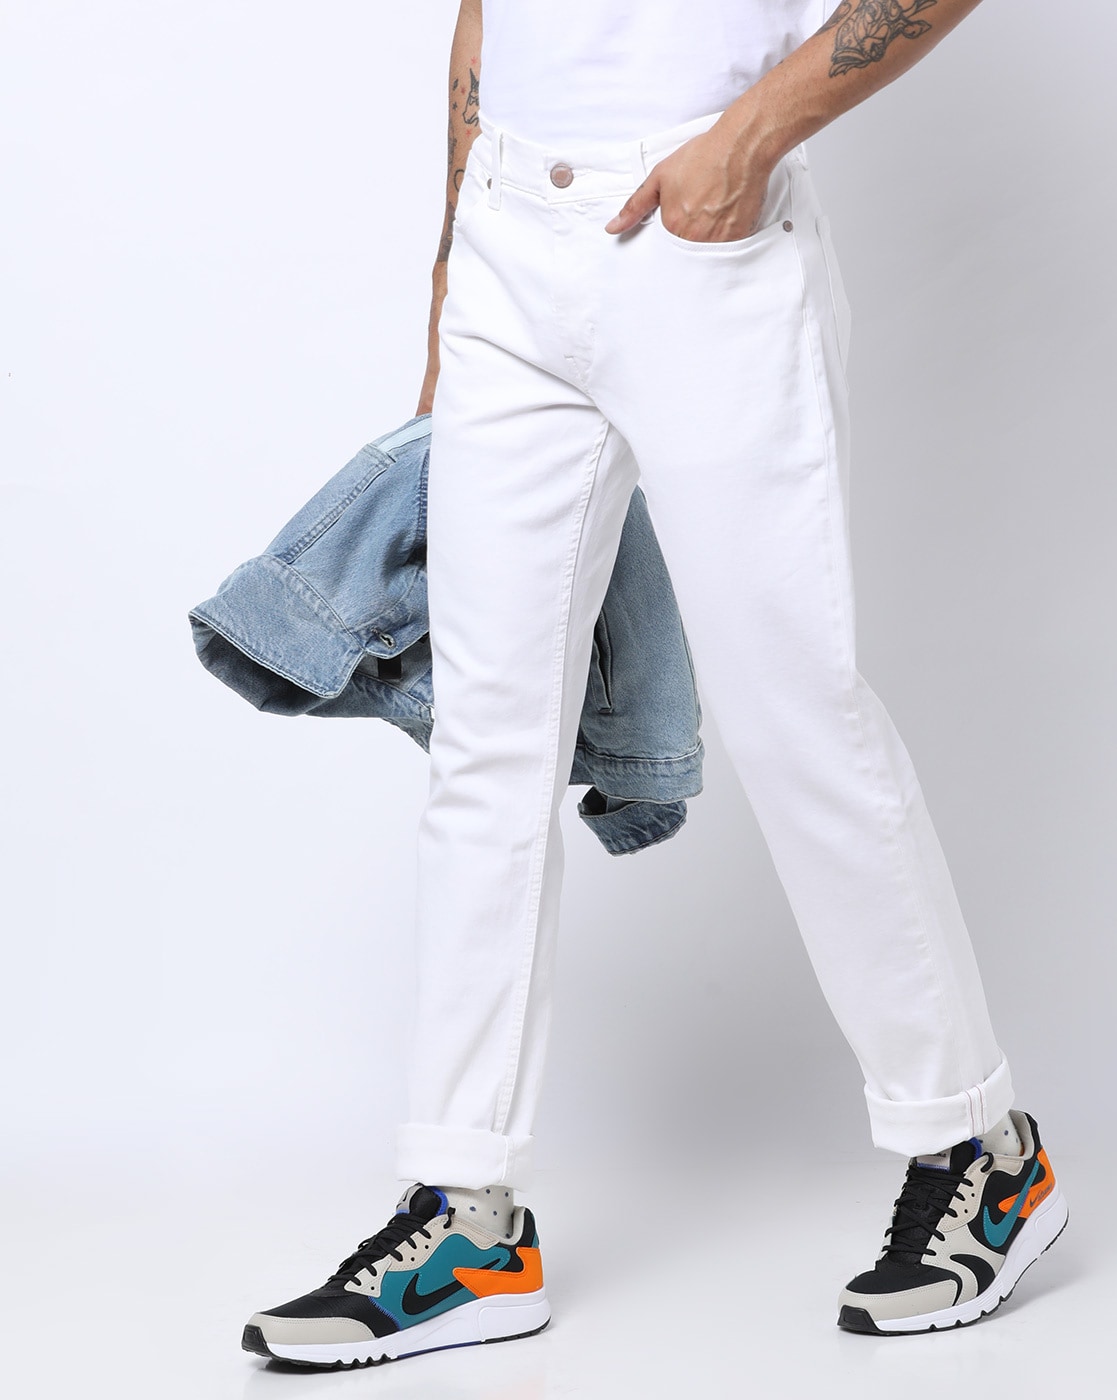 levi's white jeans mens